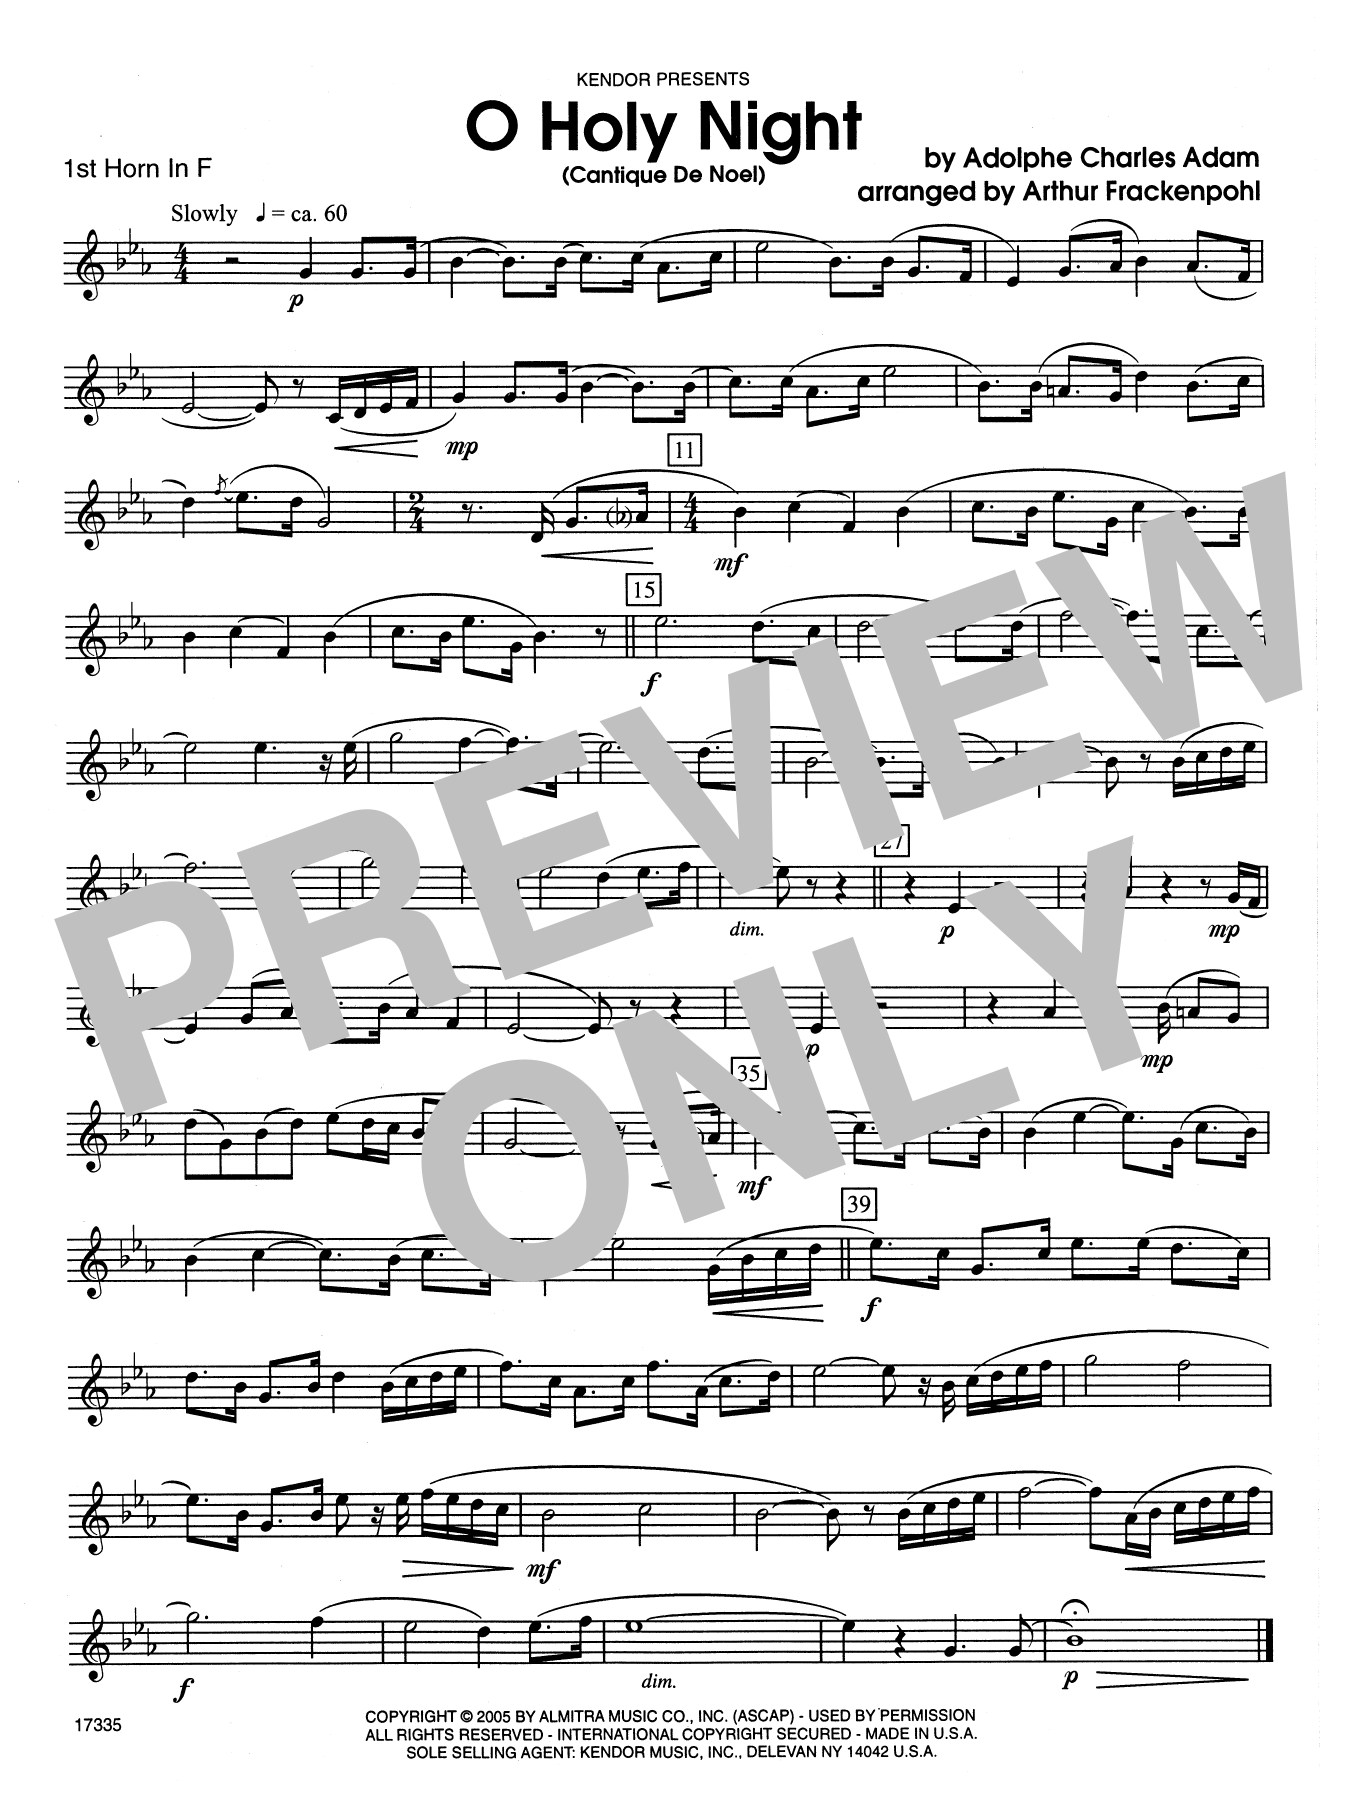 Download Arthur Frackenpohl O Holy Night (Cantique de Noel) - 1st H Sheet Music